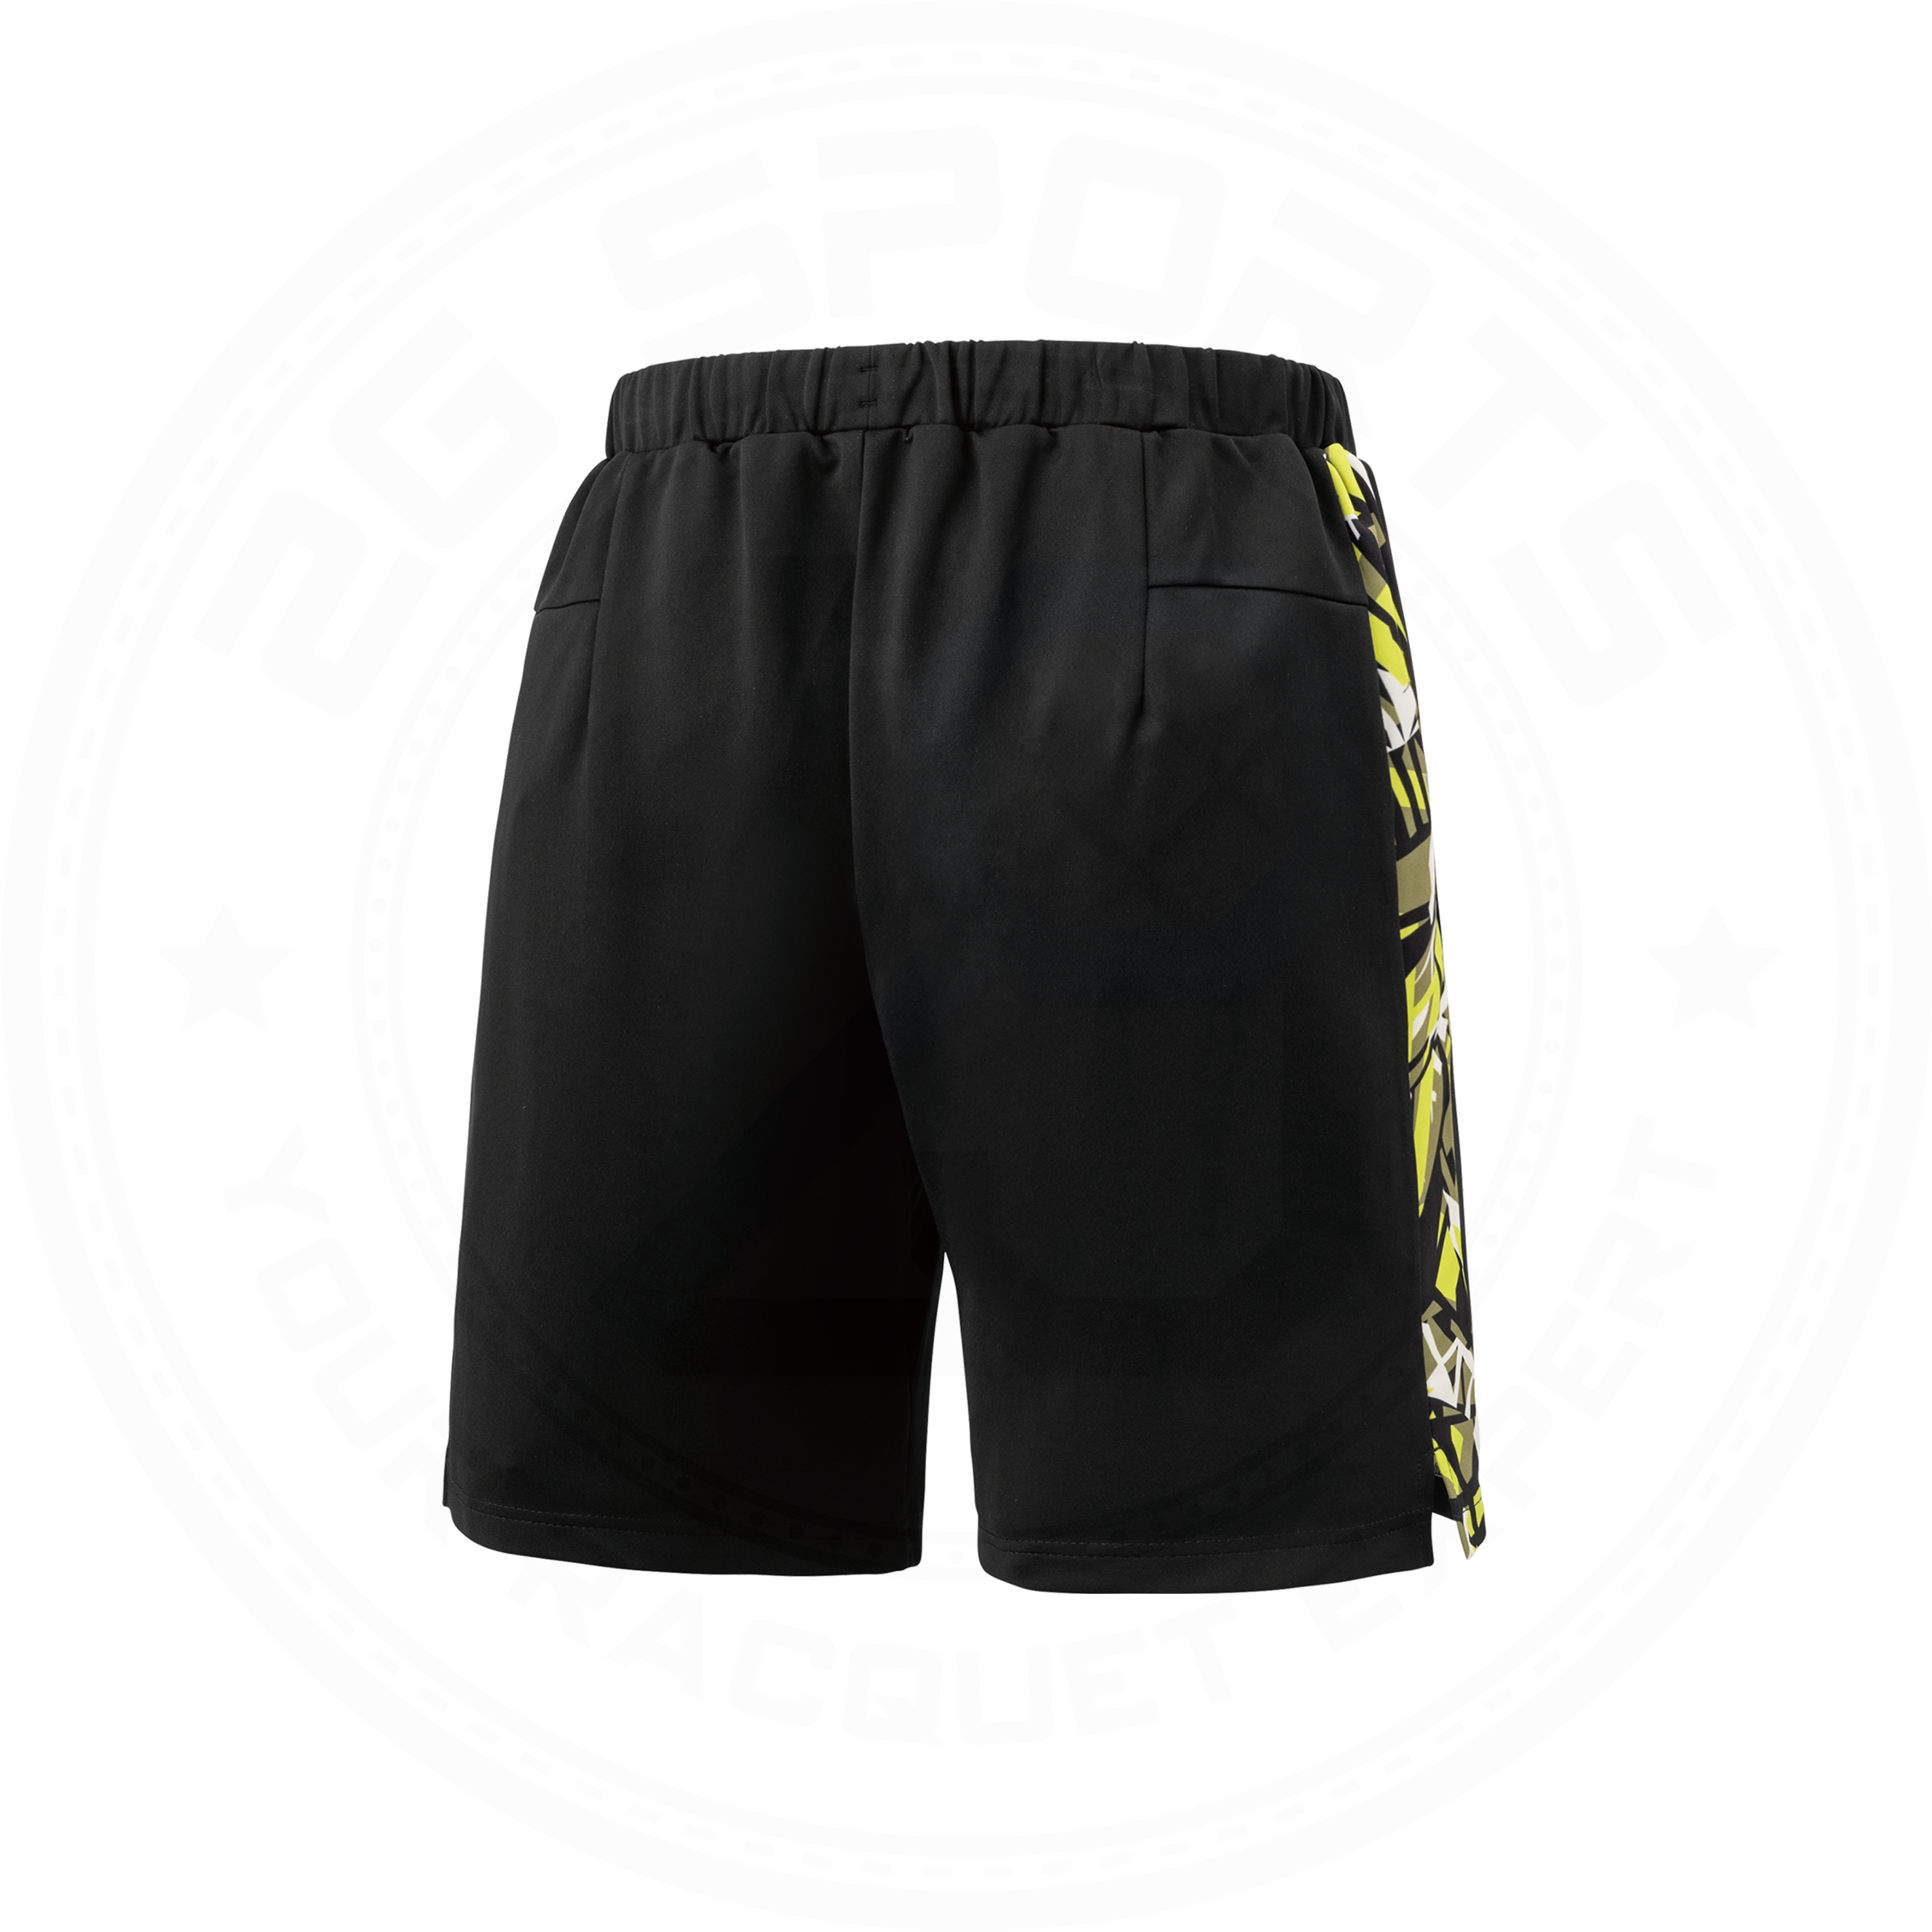 Yonex Japan National Badminton/ Sports Shorts 15155EX Black/ Yellow MEN'S (Clearance)